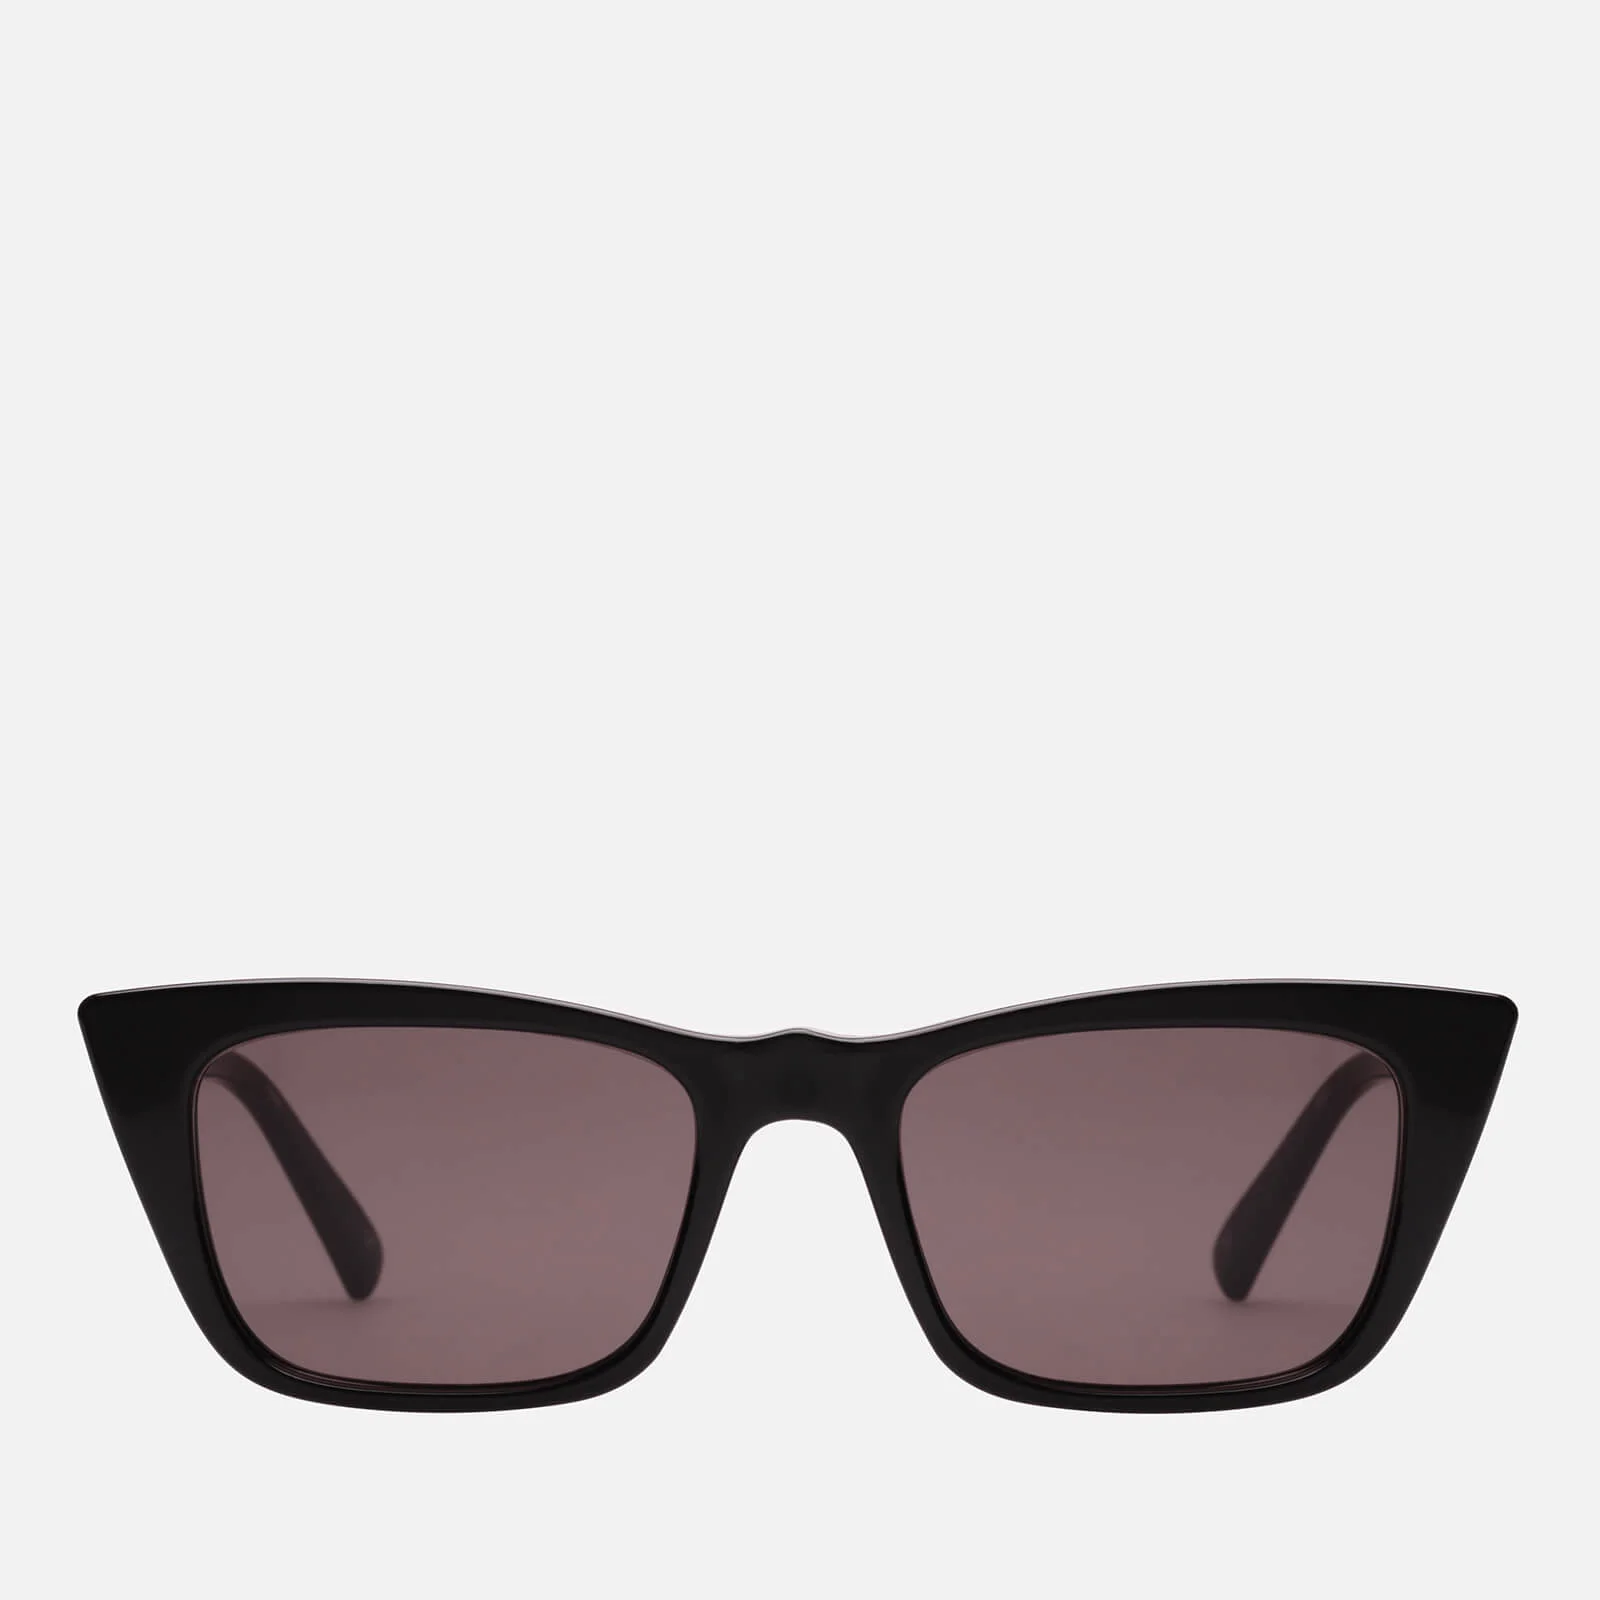 Le Specs Women's I Feel Love Sunglasses - Black Image 1